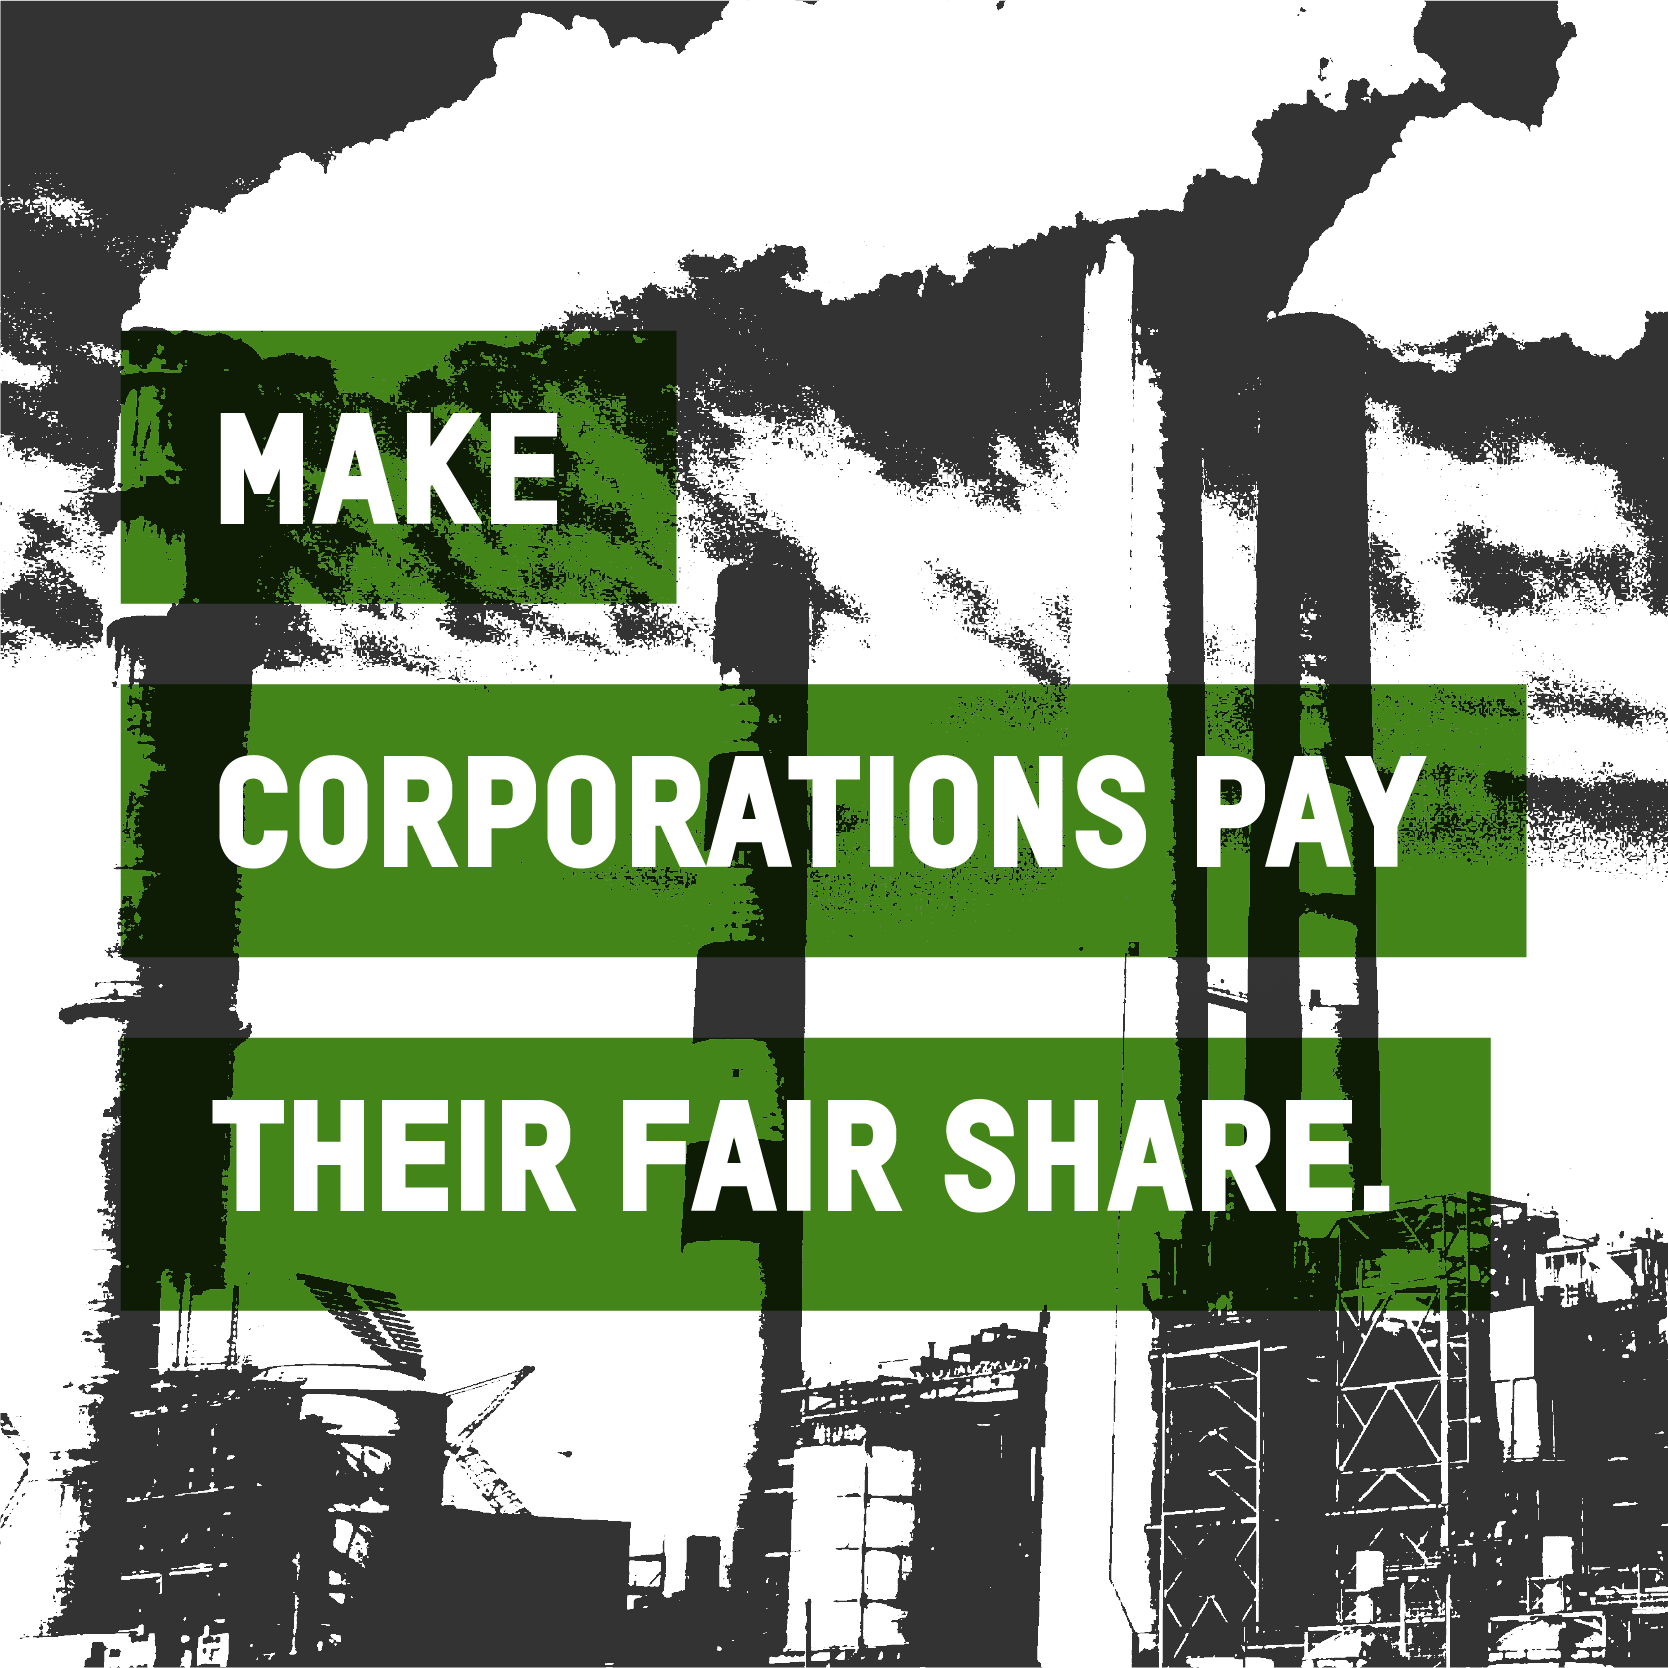 Make corporations pay their fair share